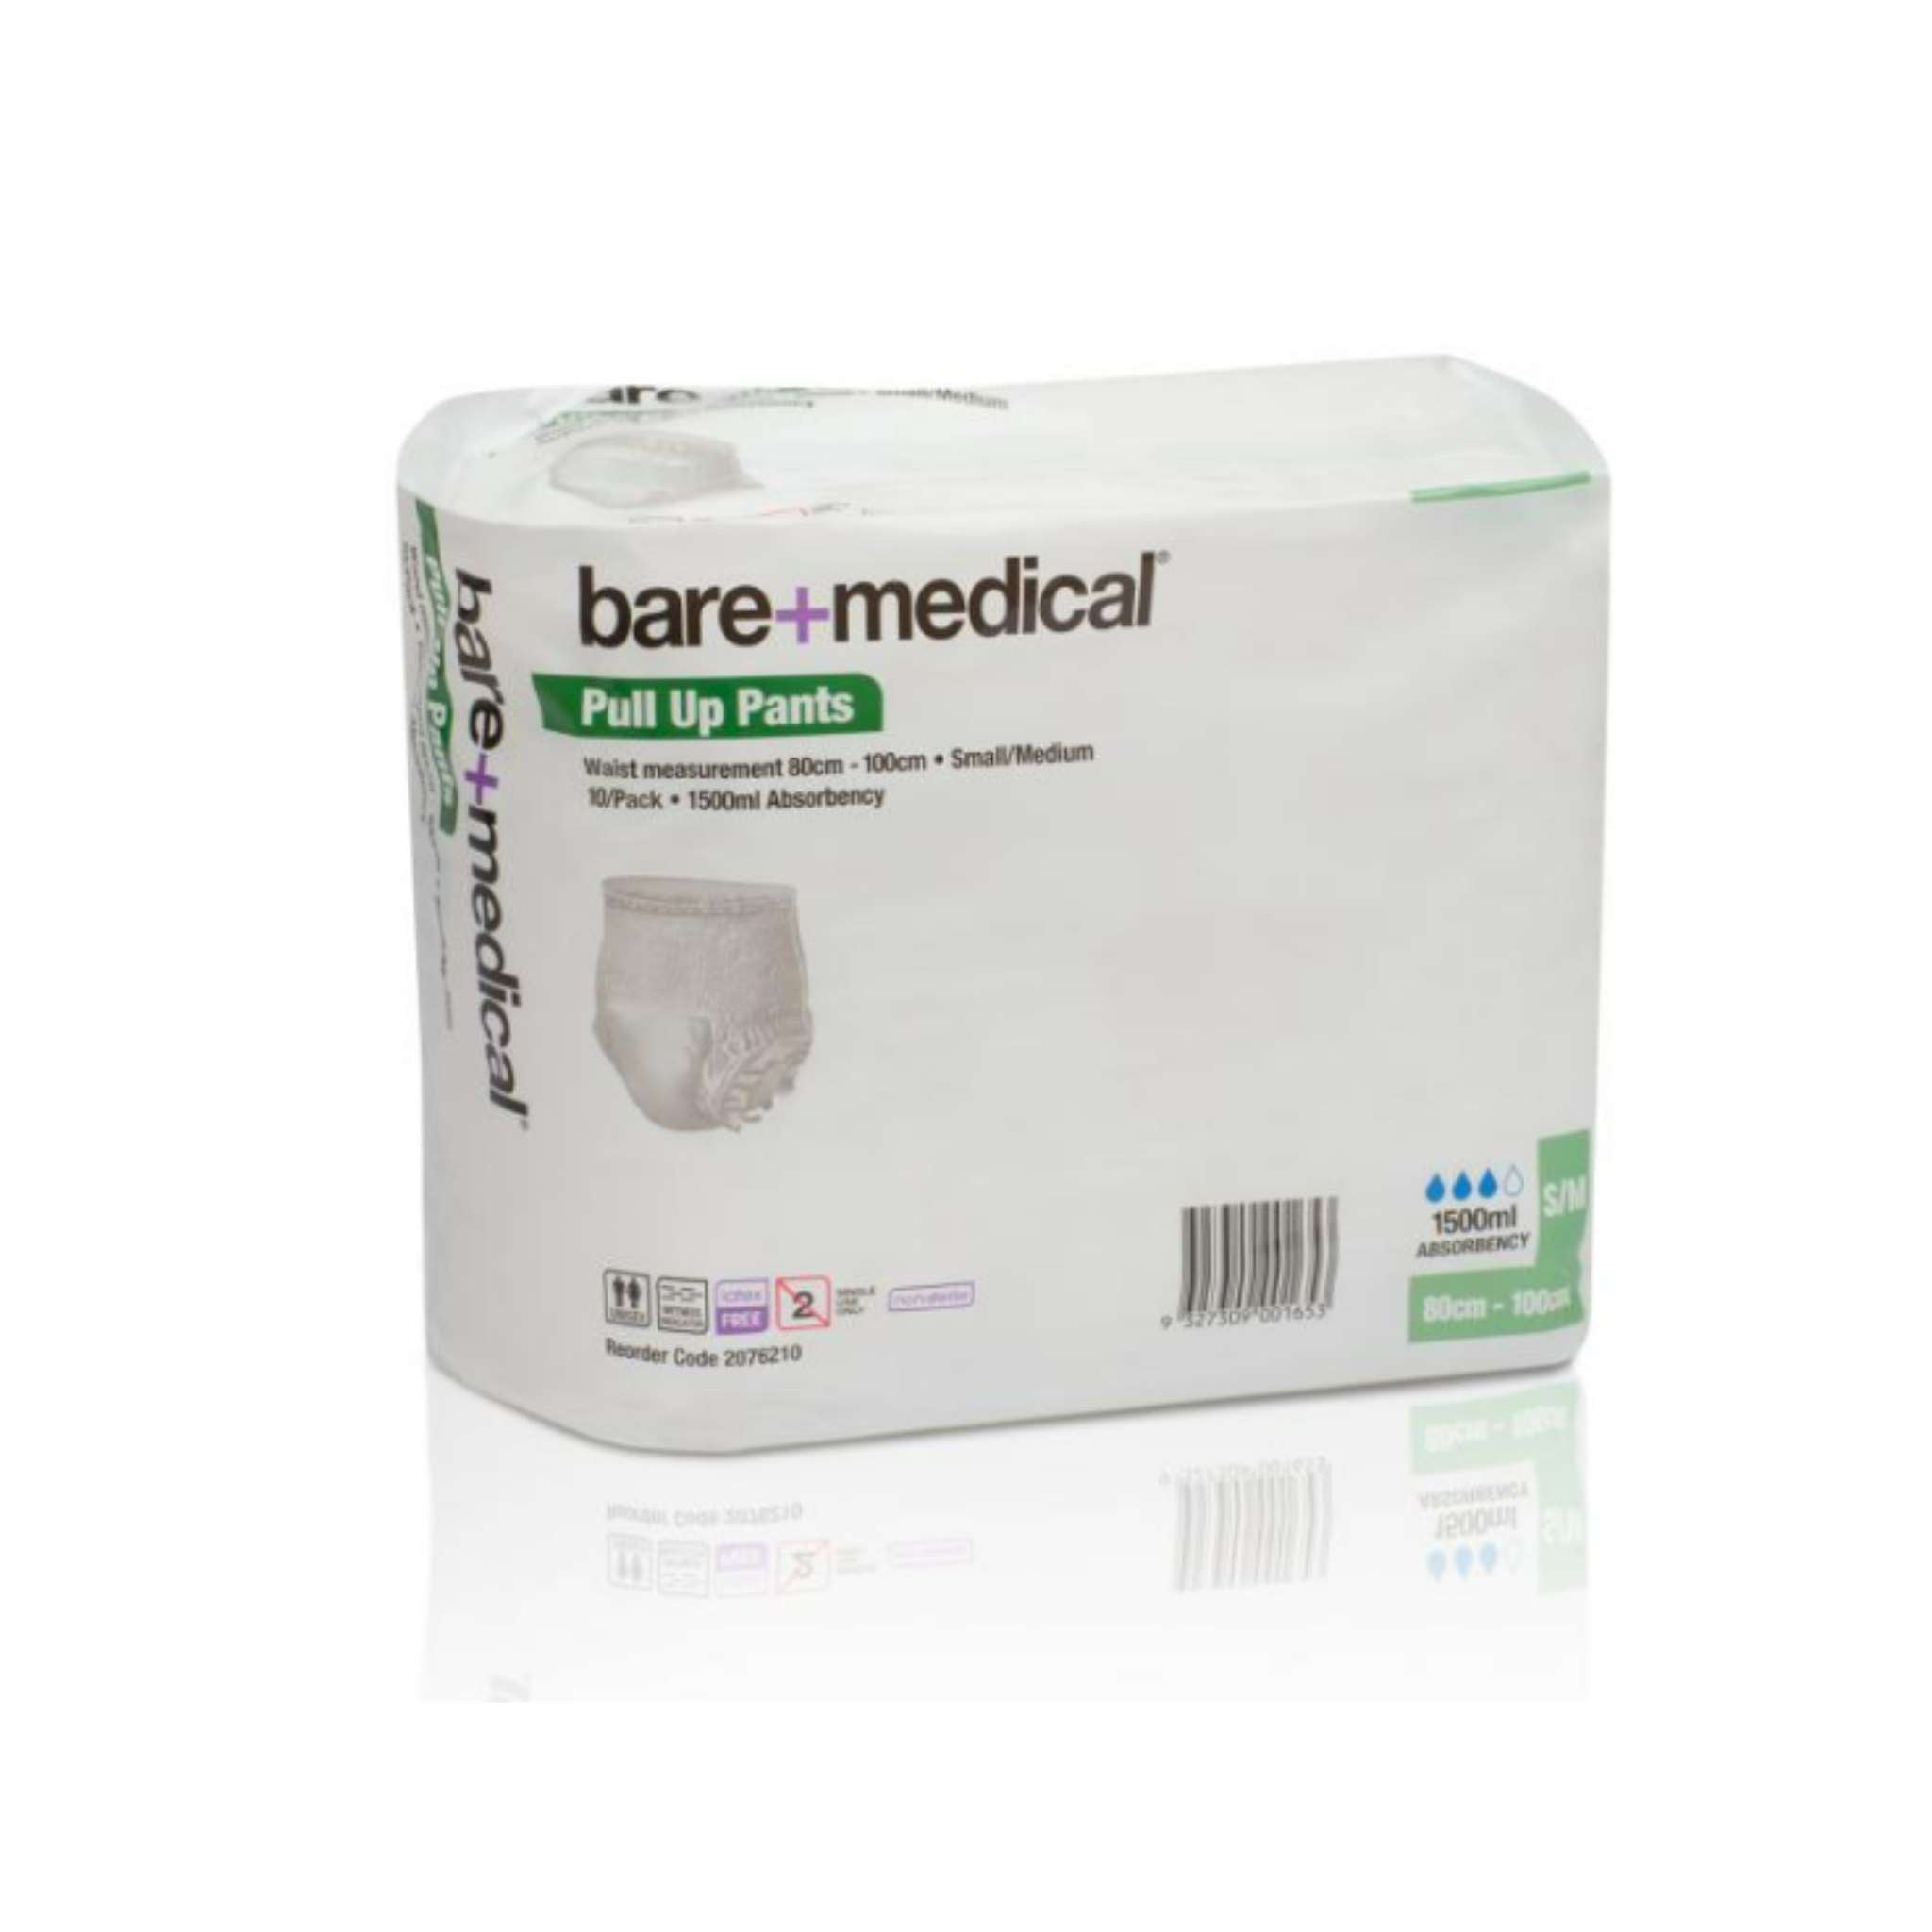 Bare Medical Pull-up Pant 1500ml - Small/Medium, Packet – Aged